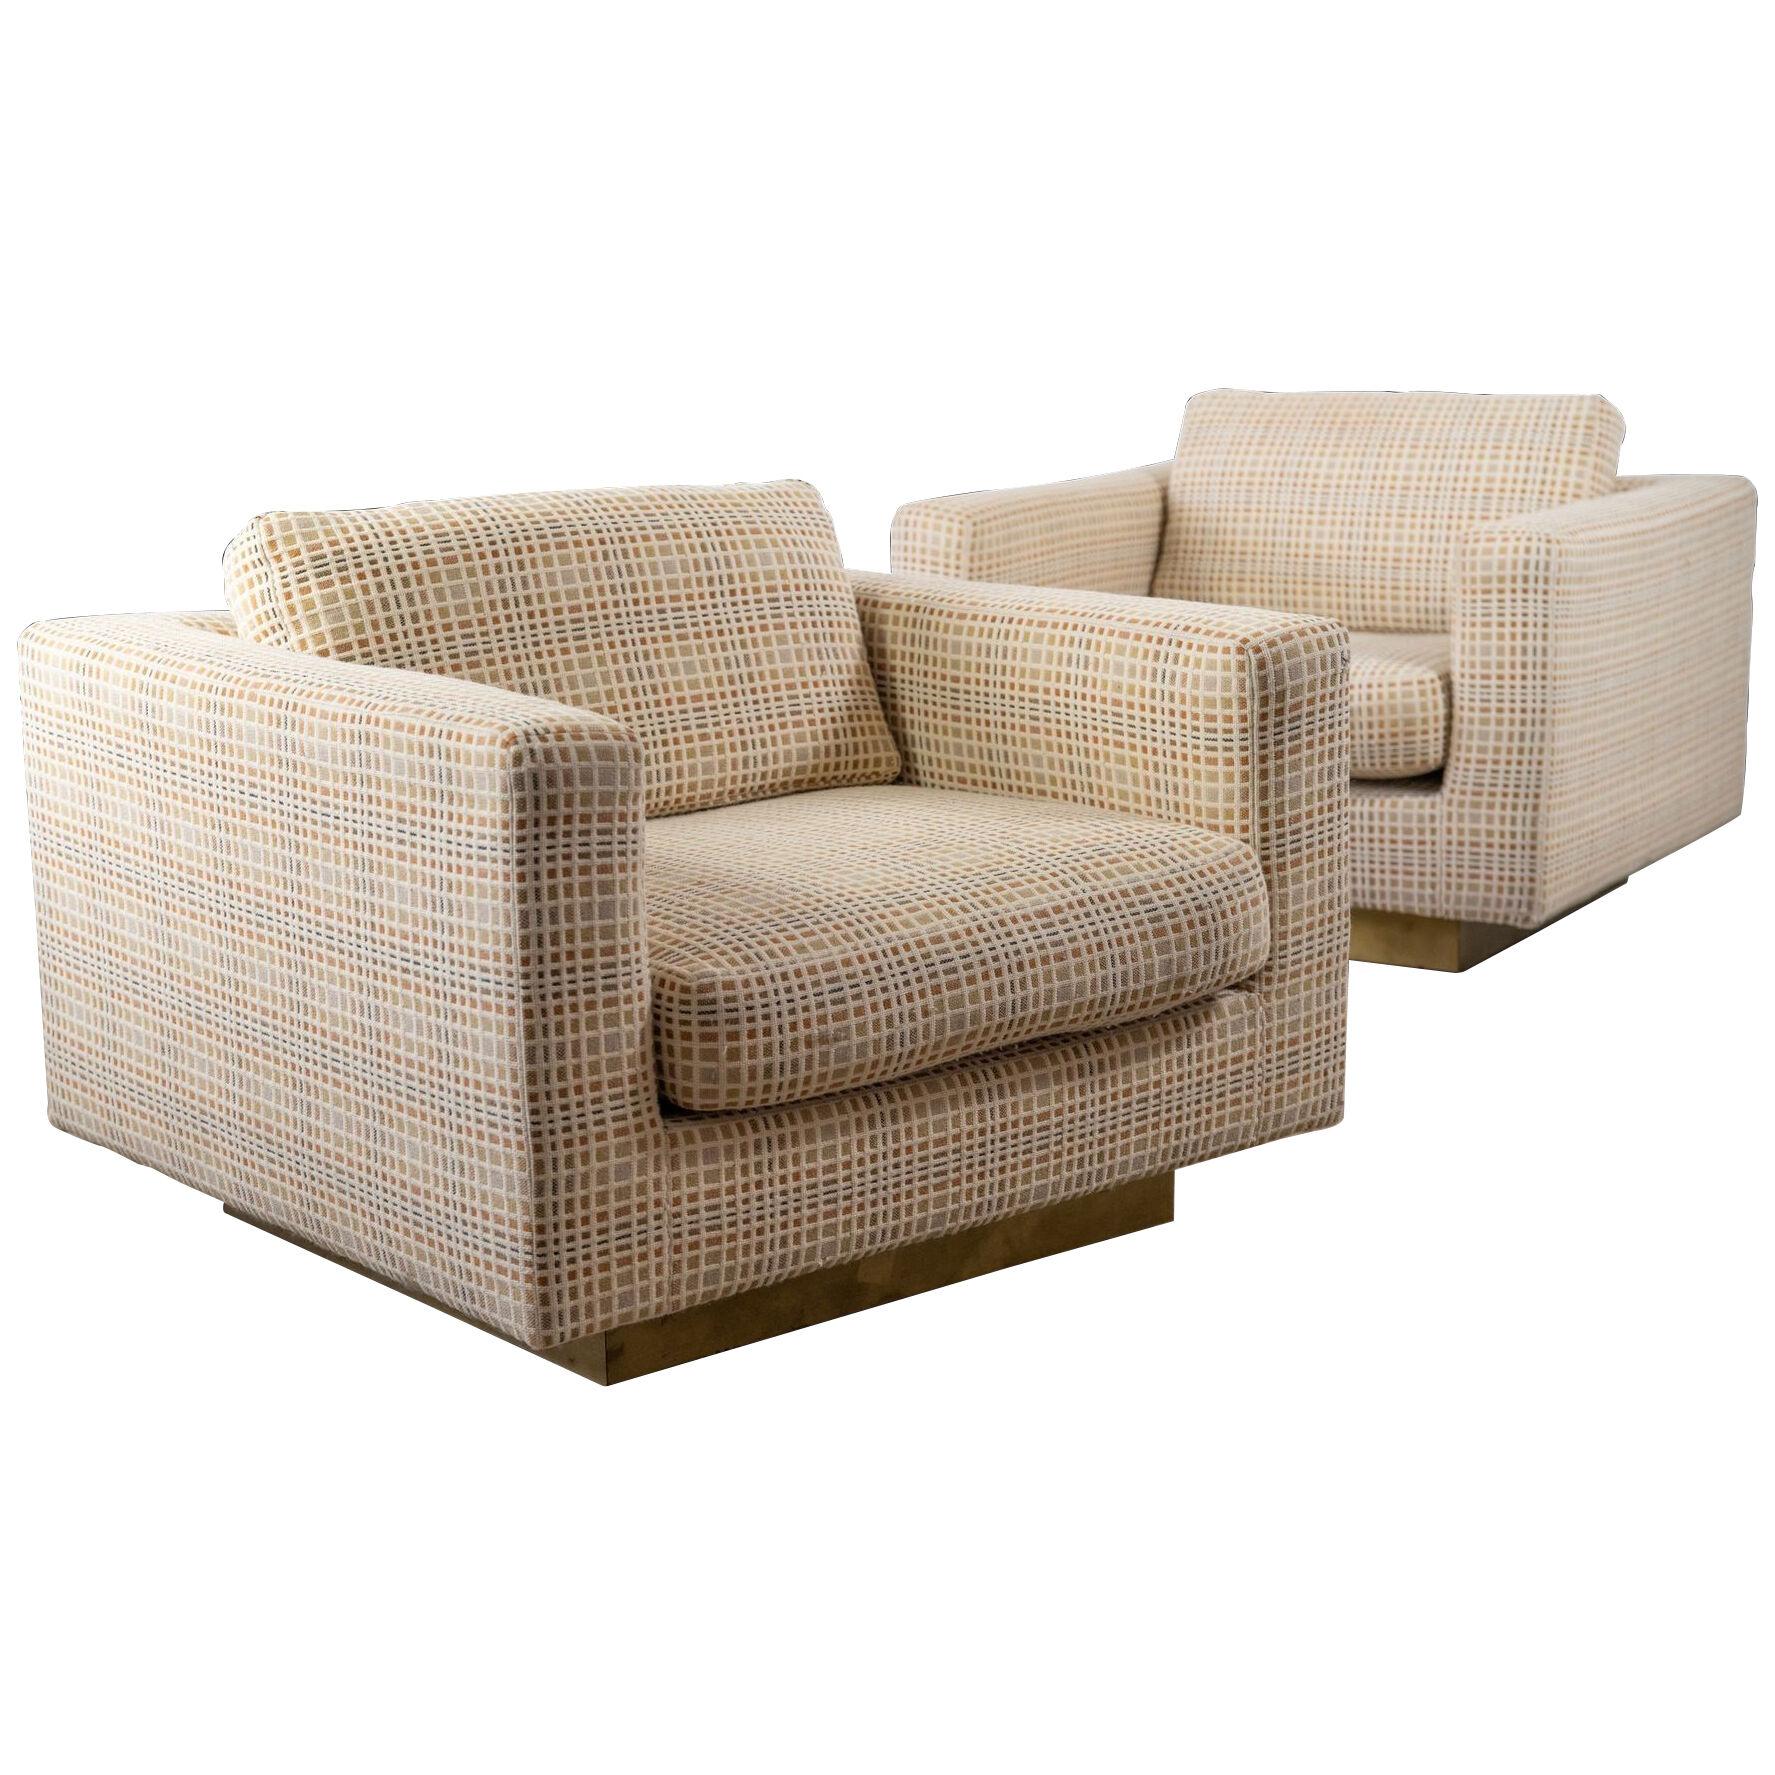 Dunbar Club Chairs with Original Jack Lenor Larsen Upholstery